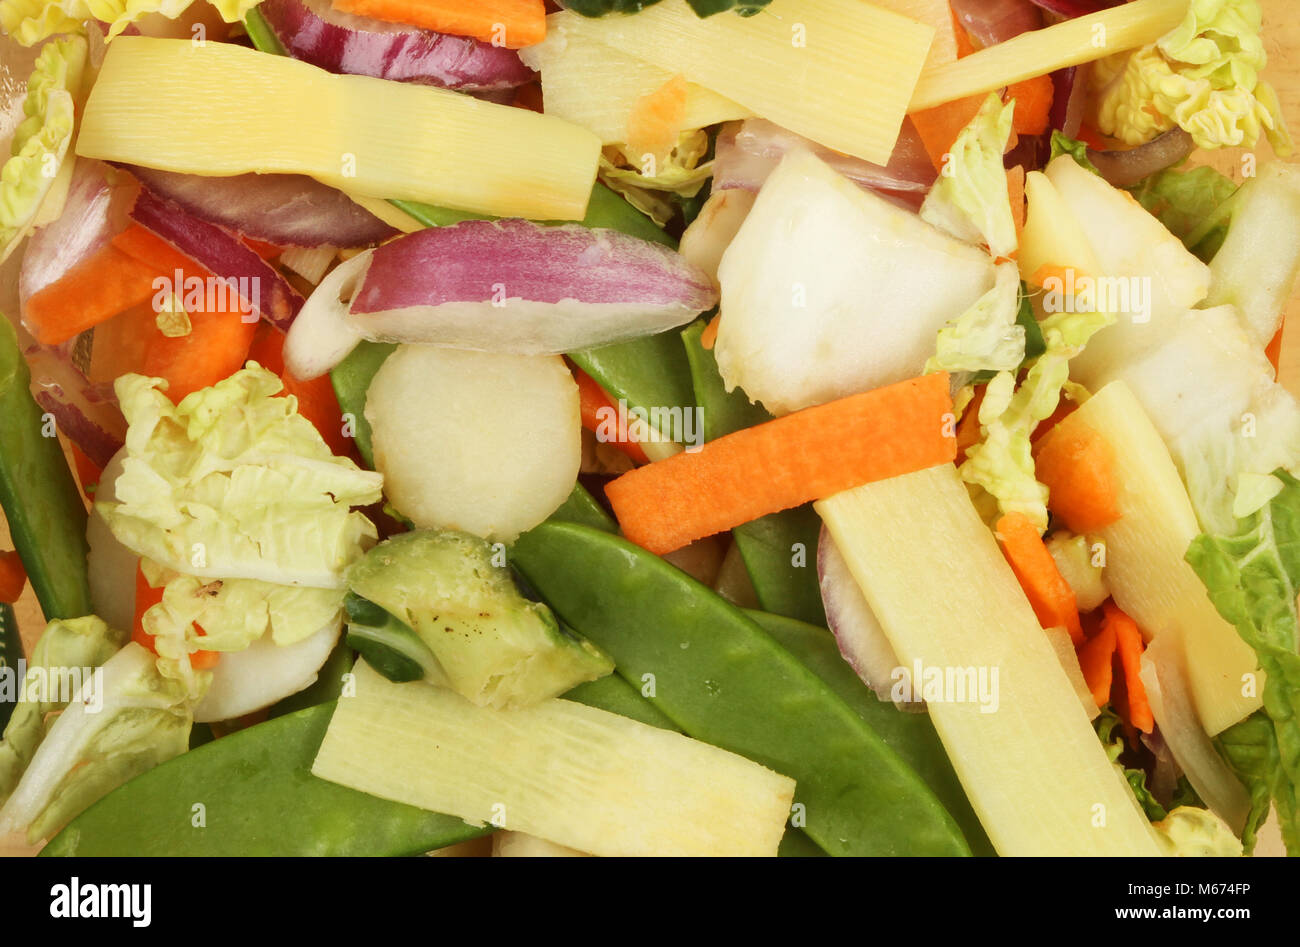 Closeup of a vegetable stir fry mix Stock Photo